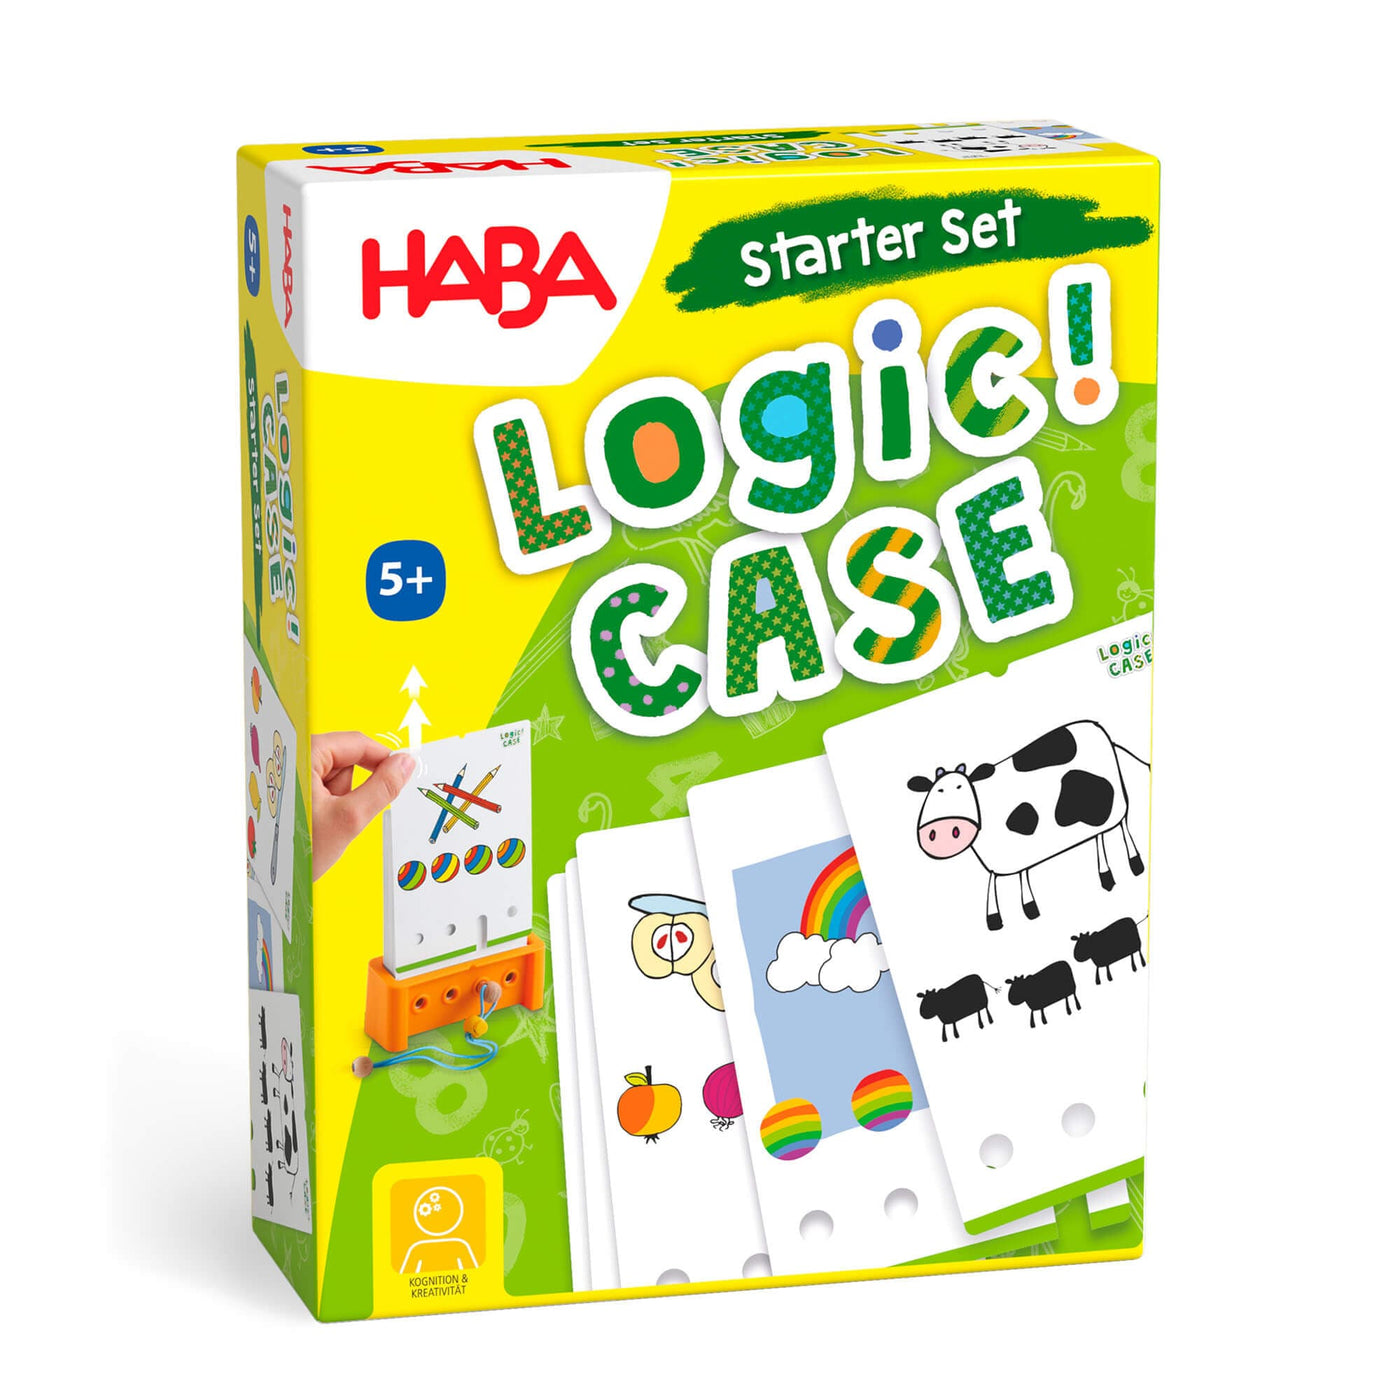 Logic! CASE Starter Set 5+ - HABA USA